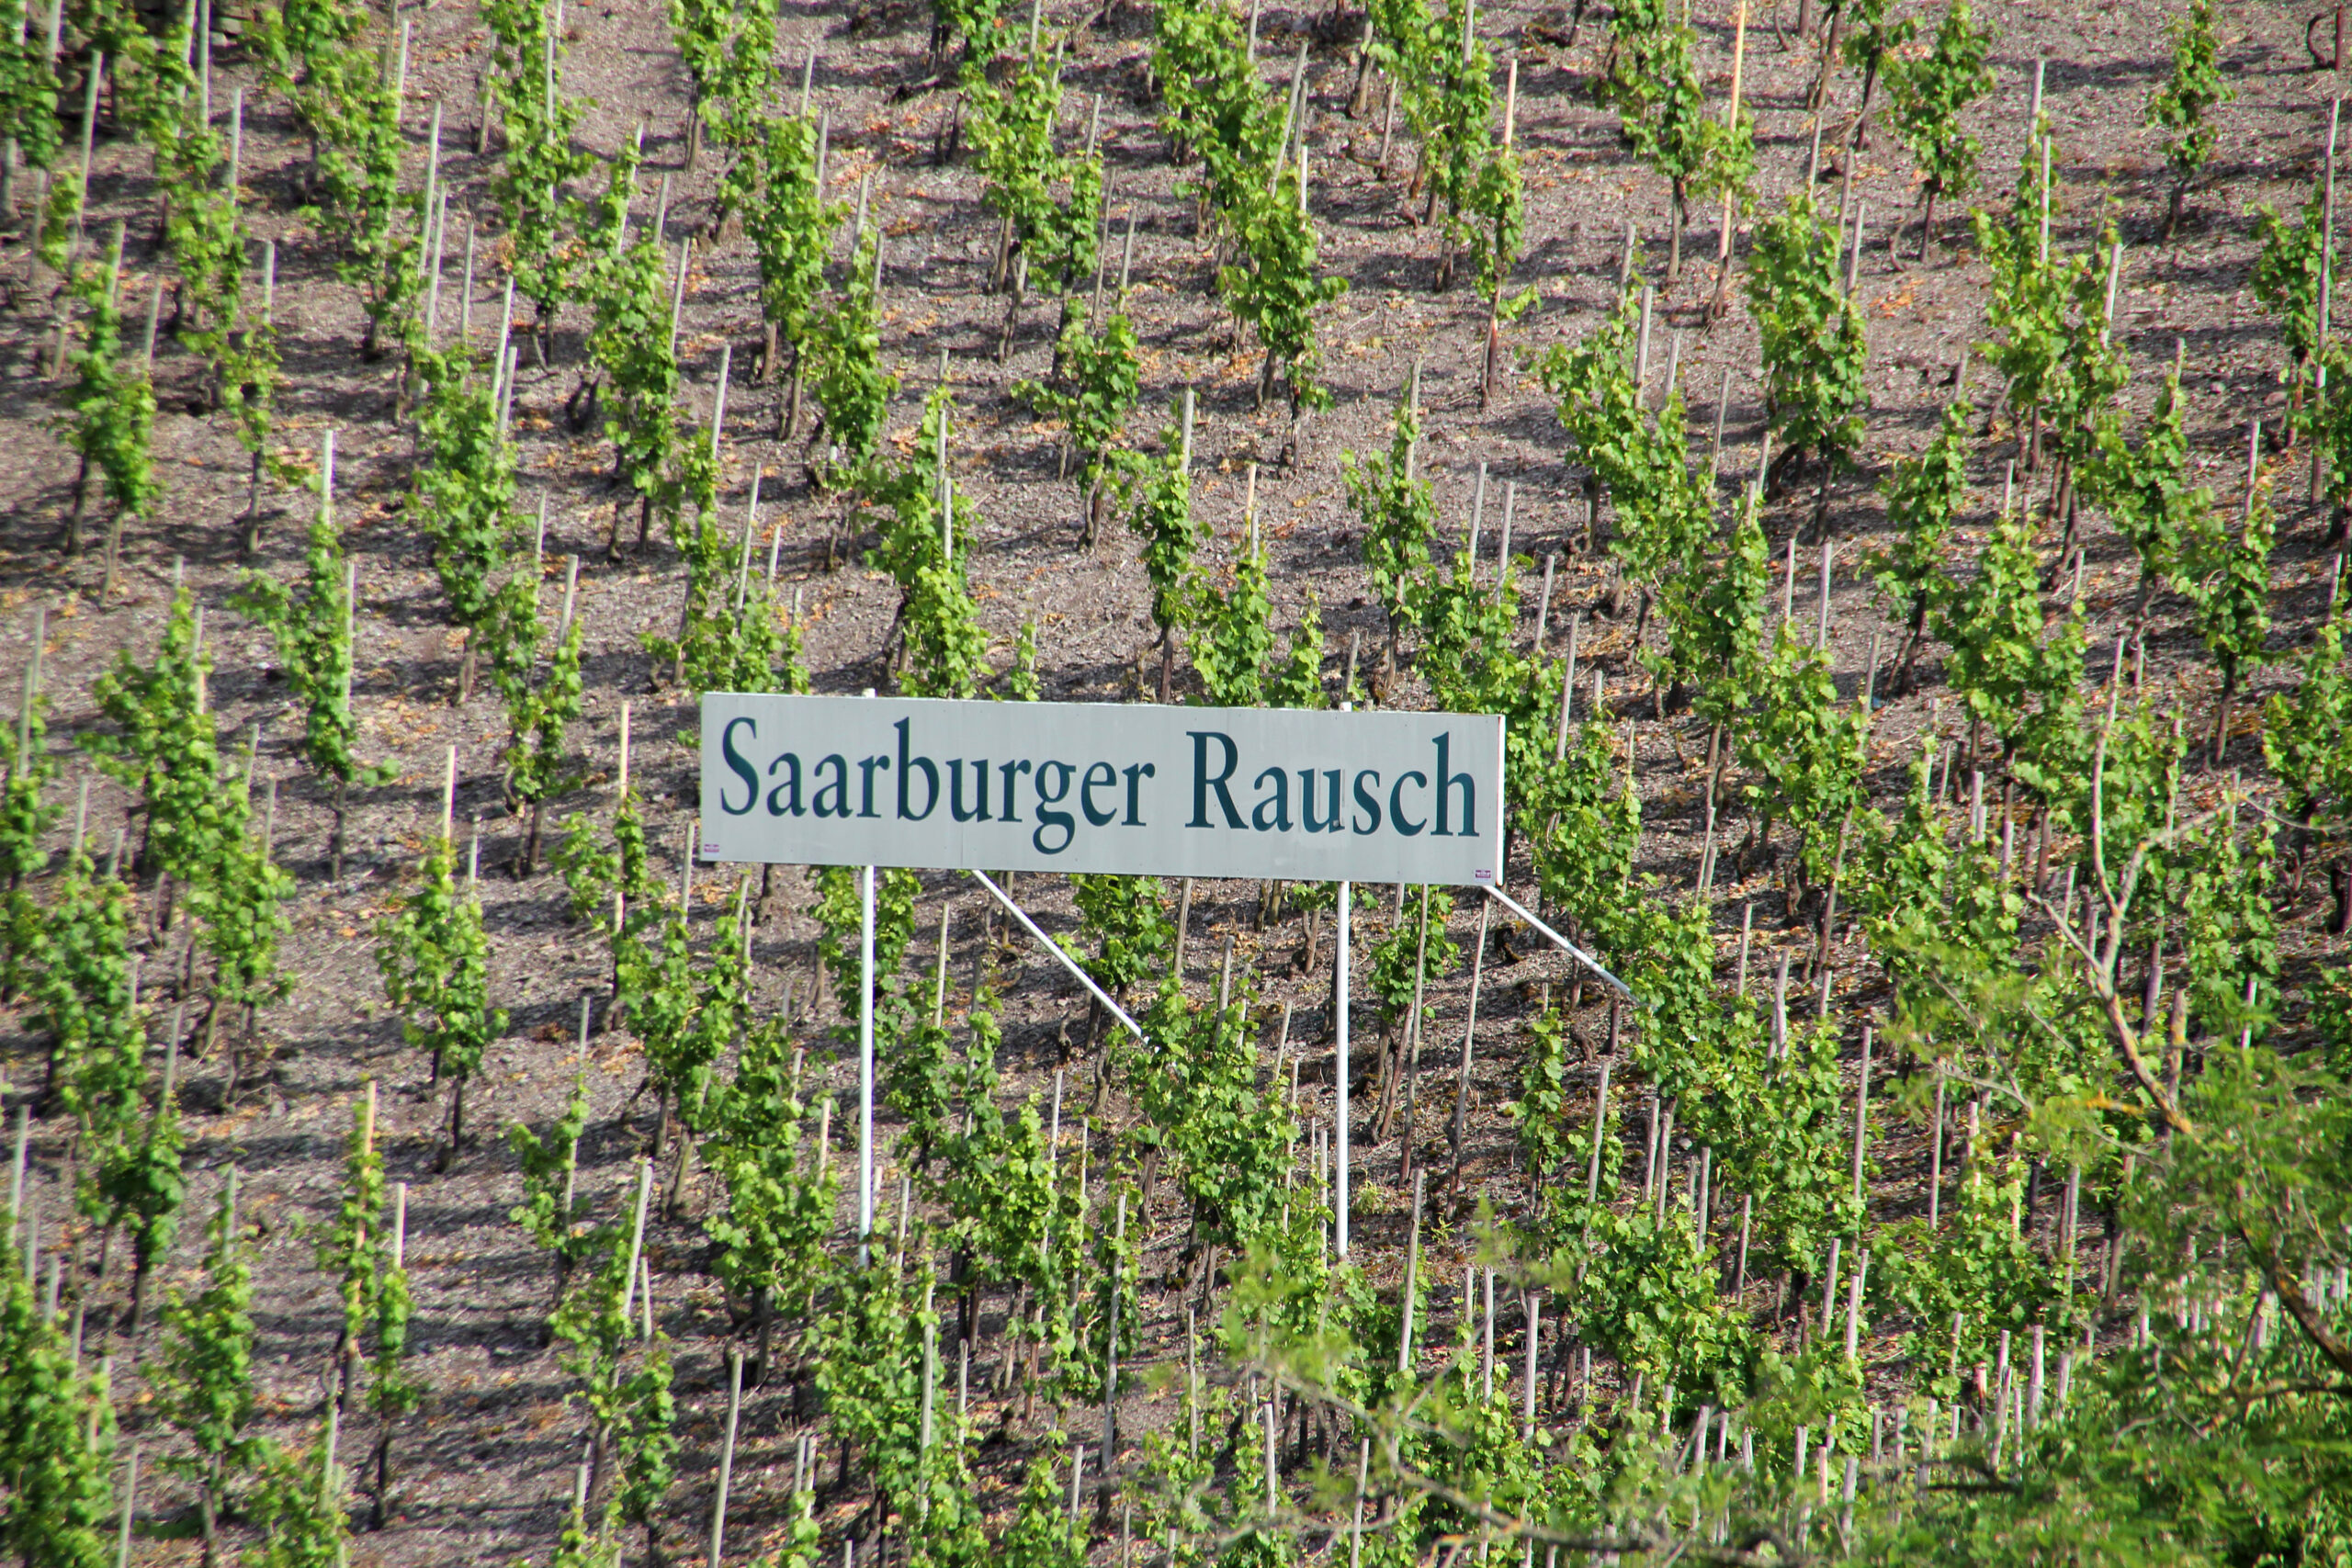 Saarburger Rausch